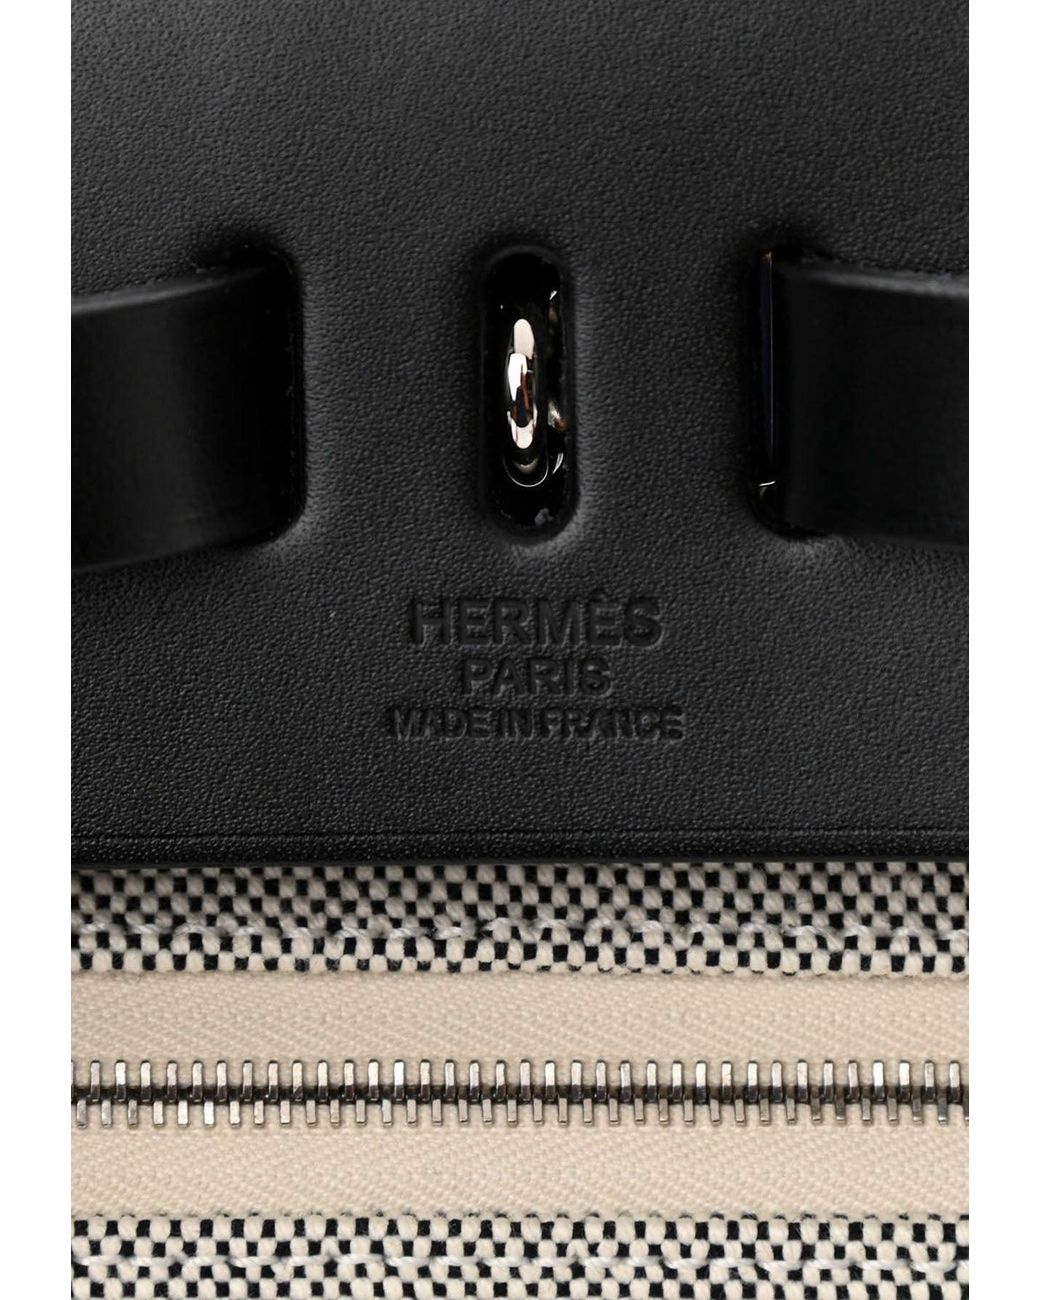 Hermes Herbag Backpack Sac A Dos 2 in 1 855865